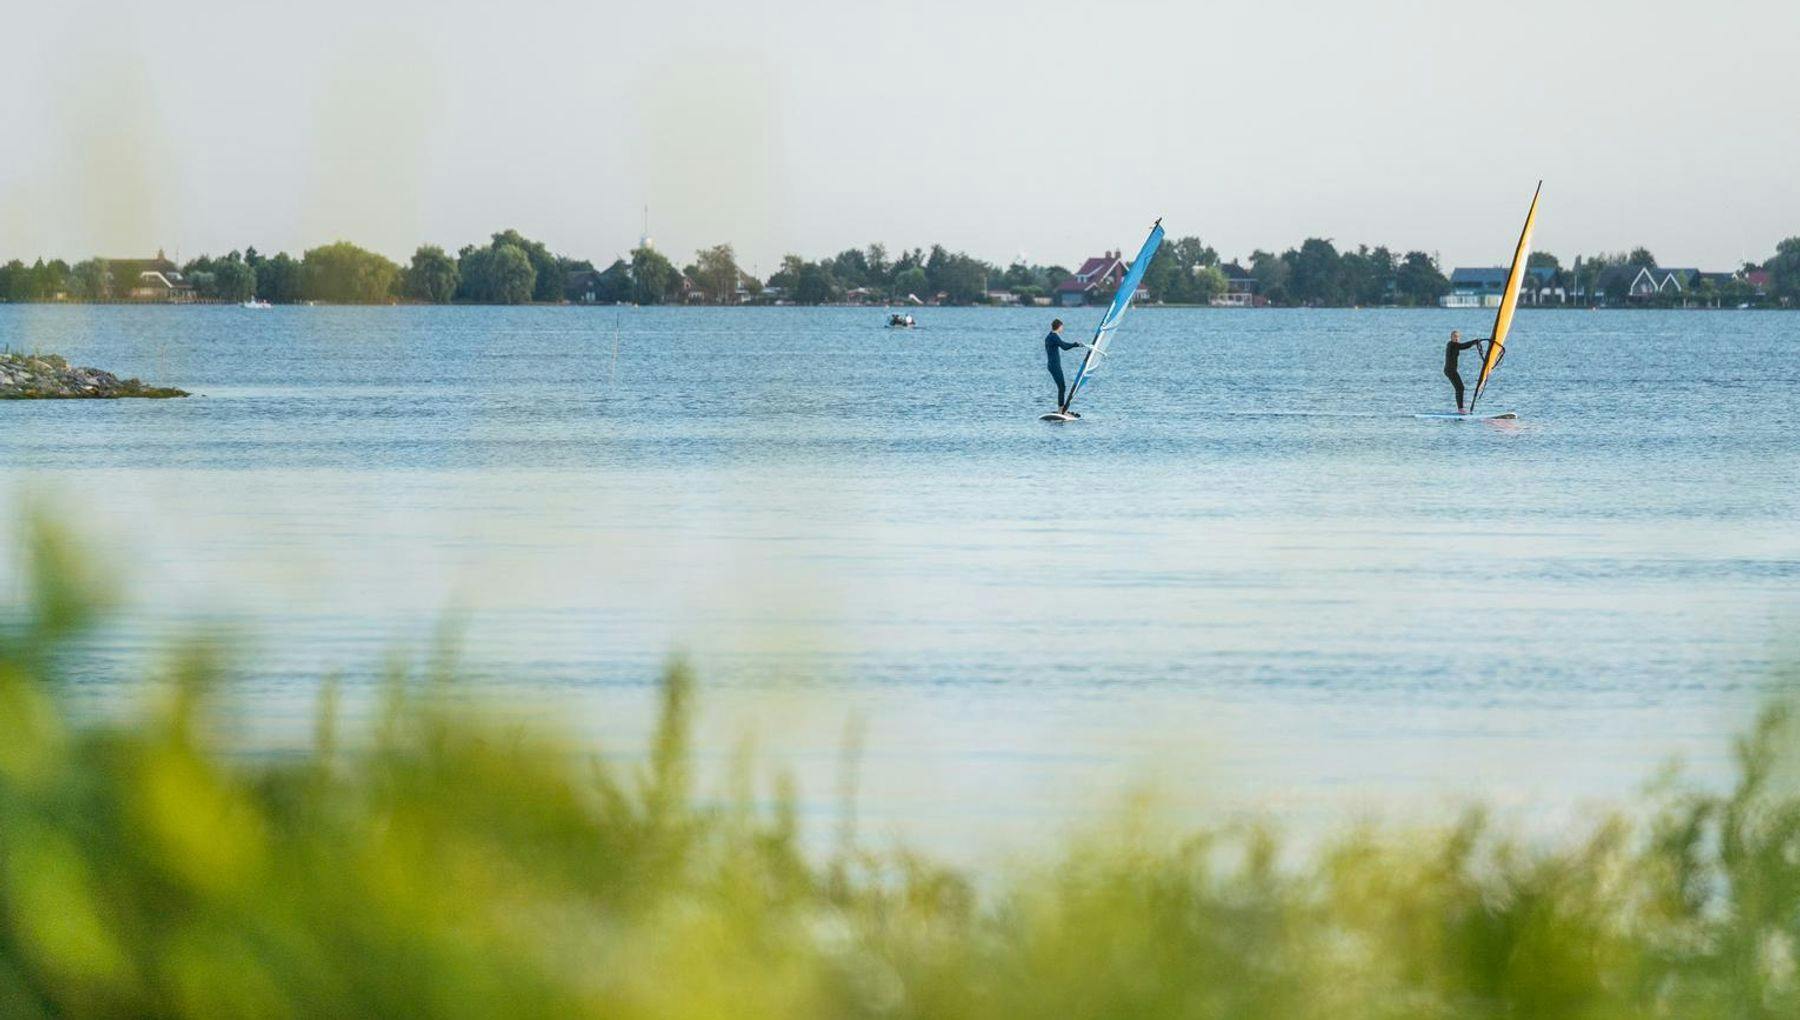 Two windsurfers on the Westeinderplassen near Aalsmeer.